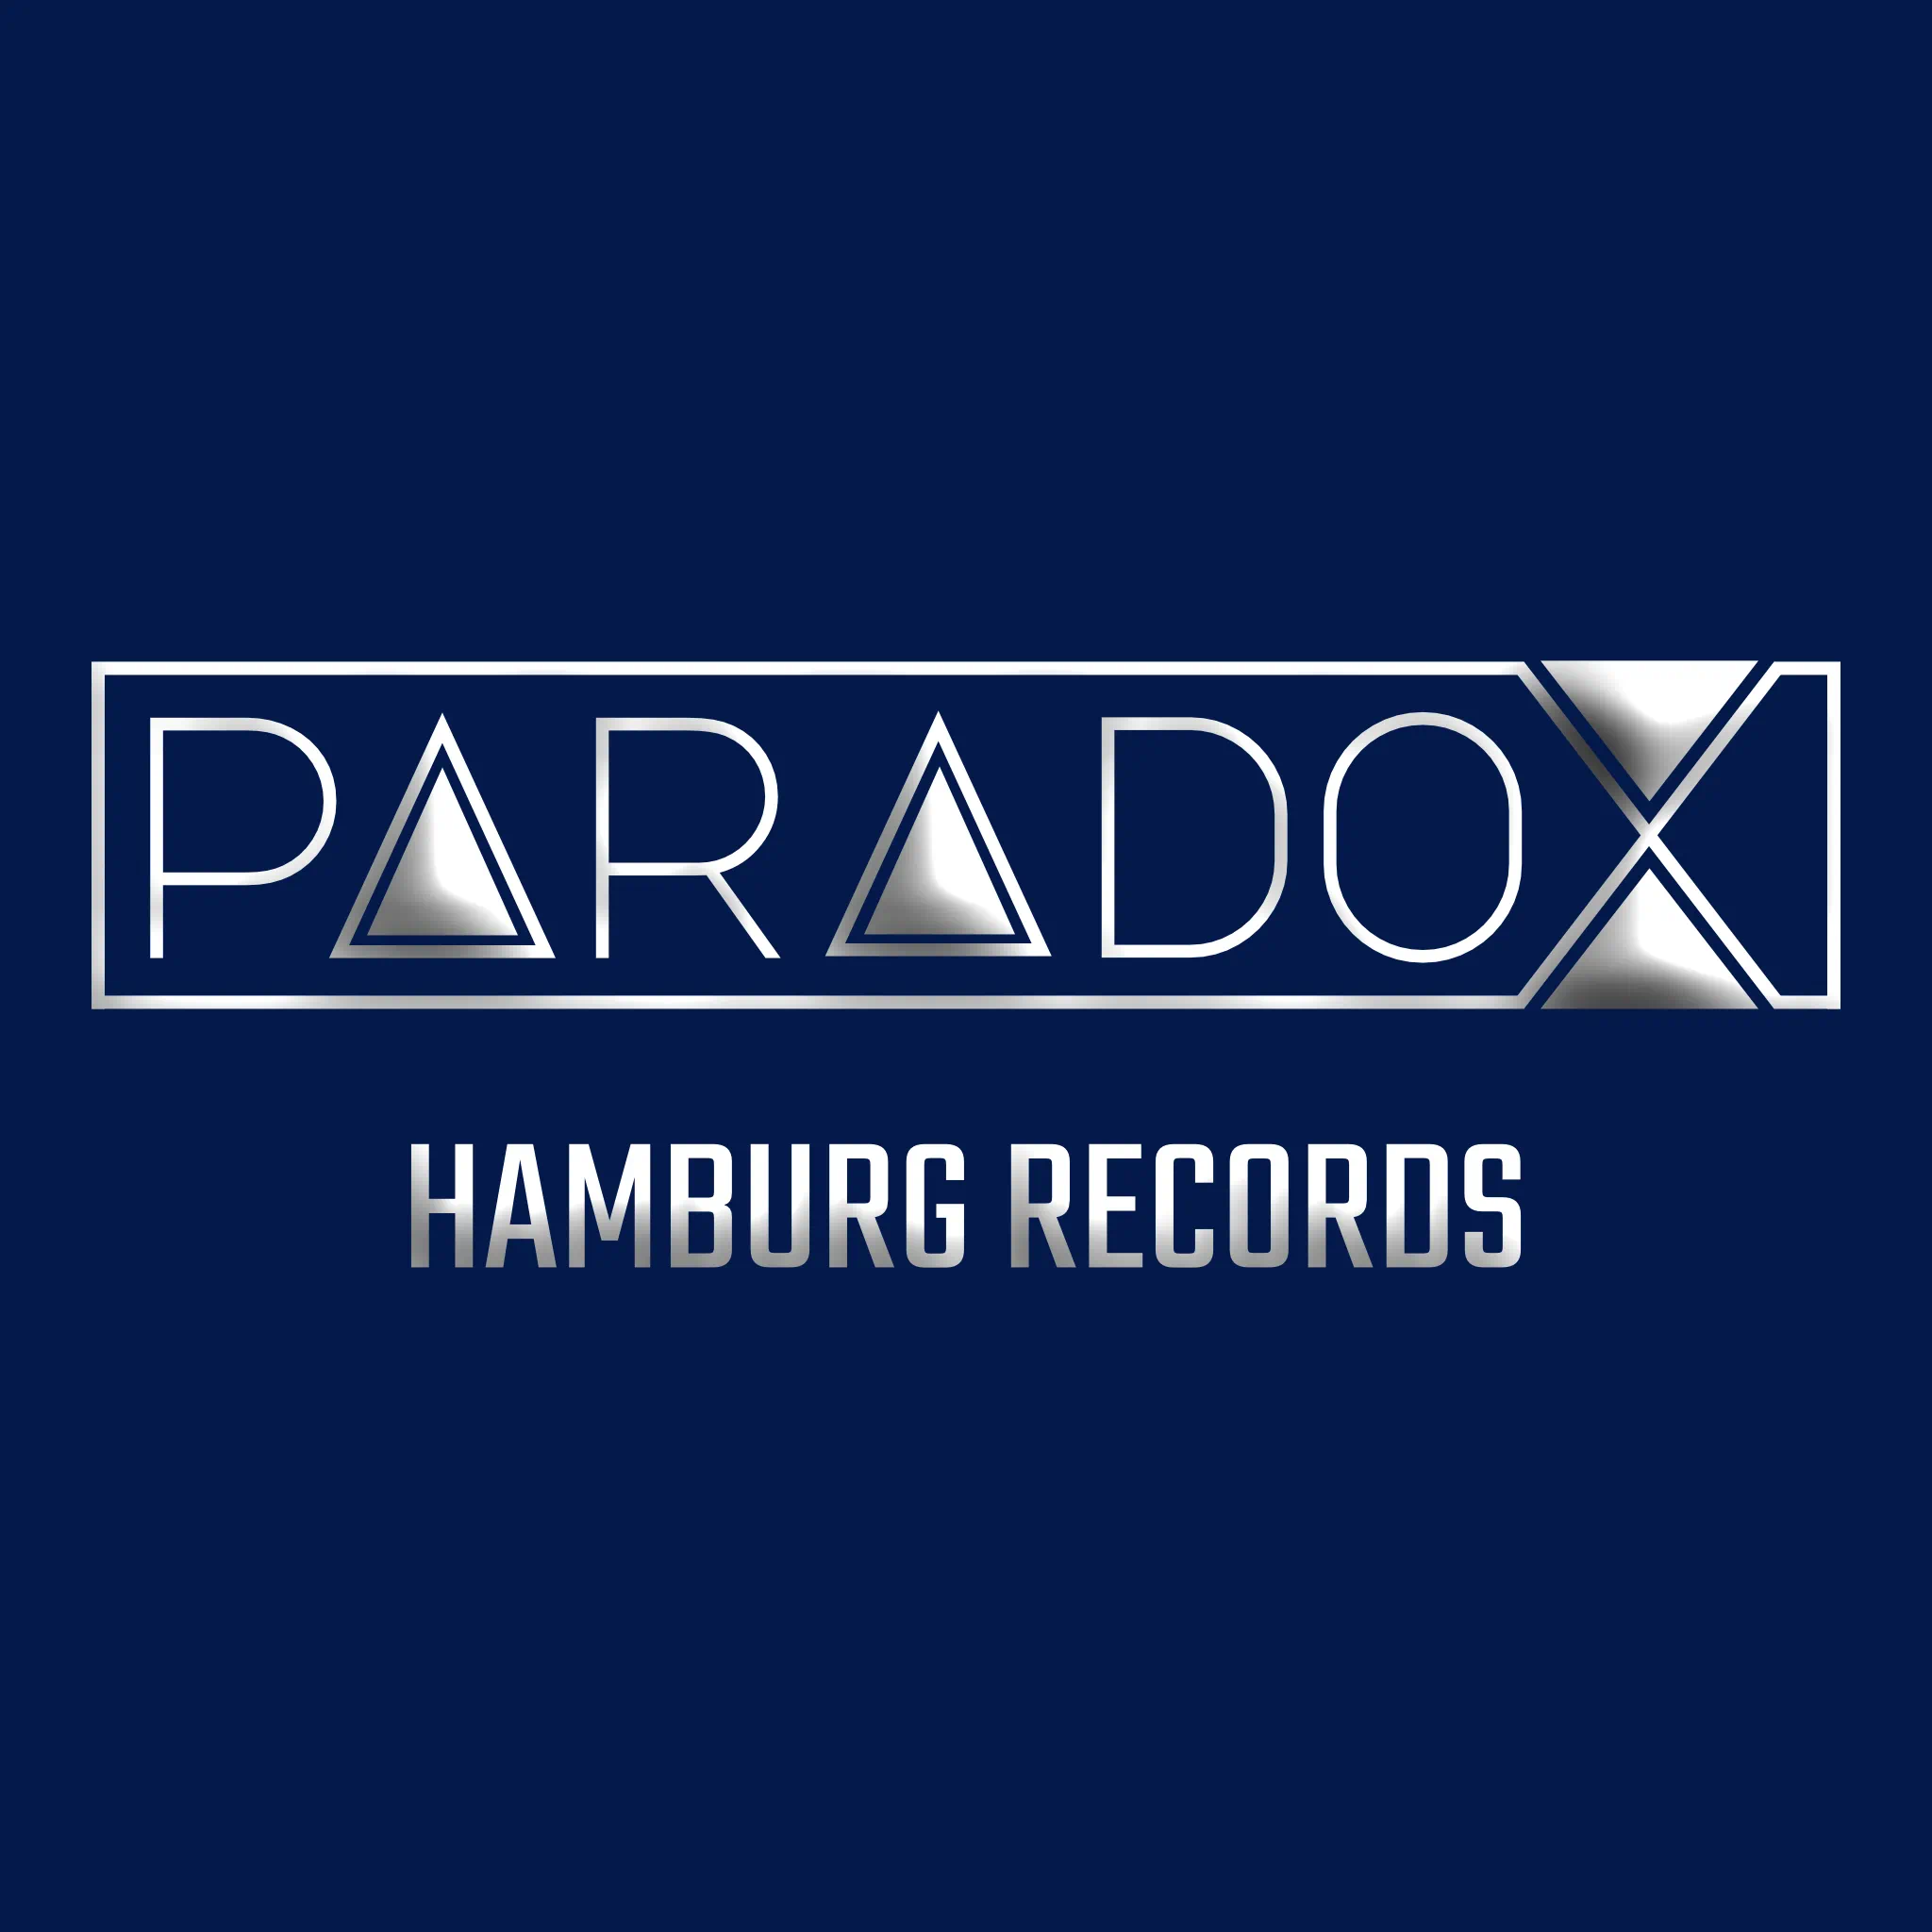 Paradox Hamburg Records